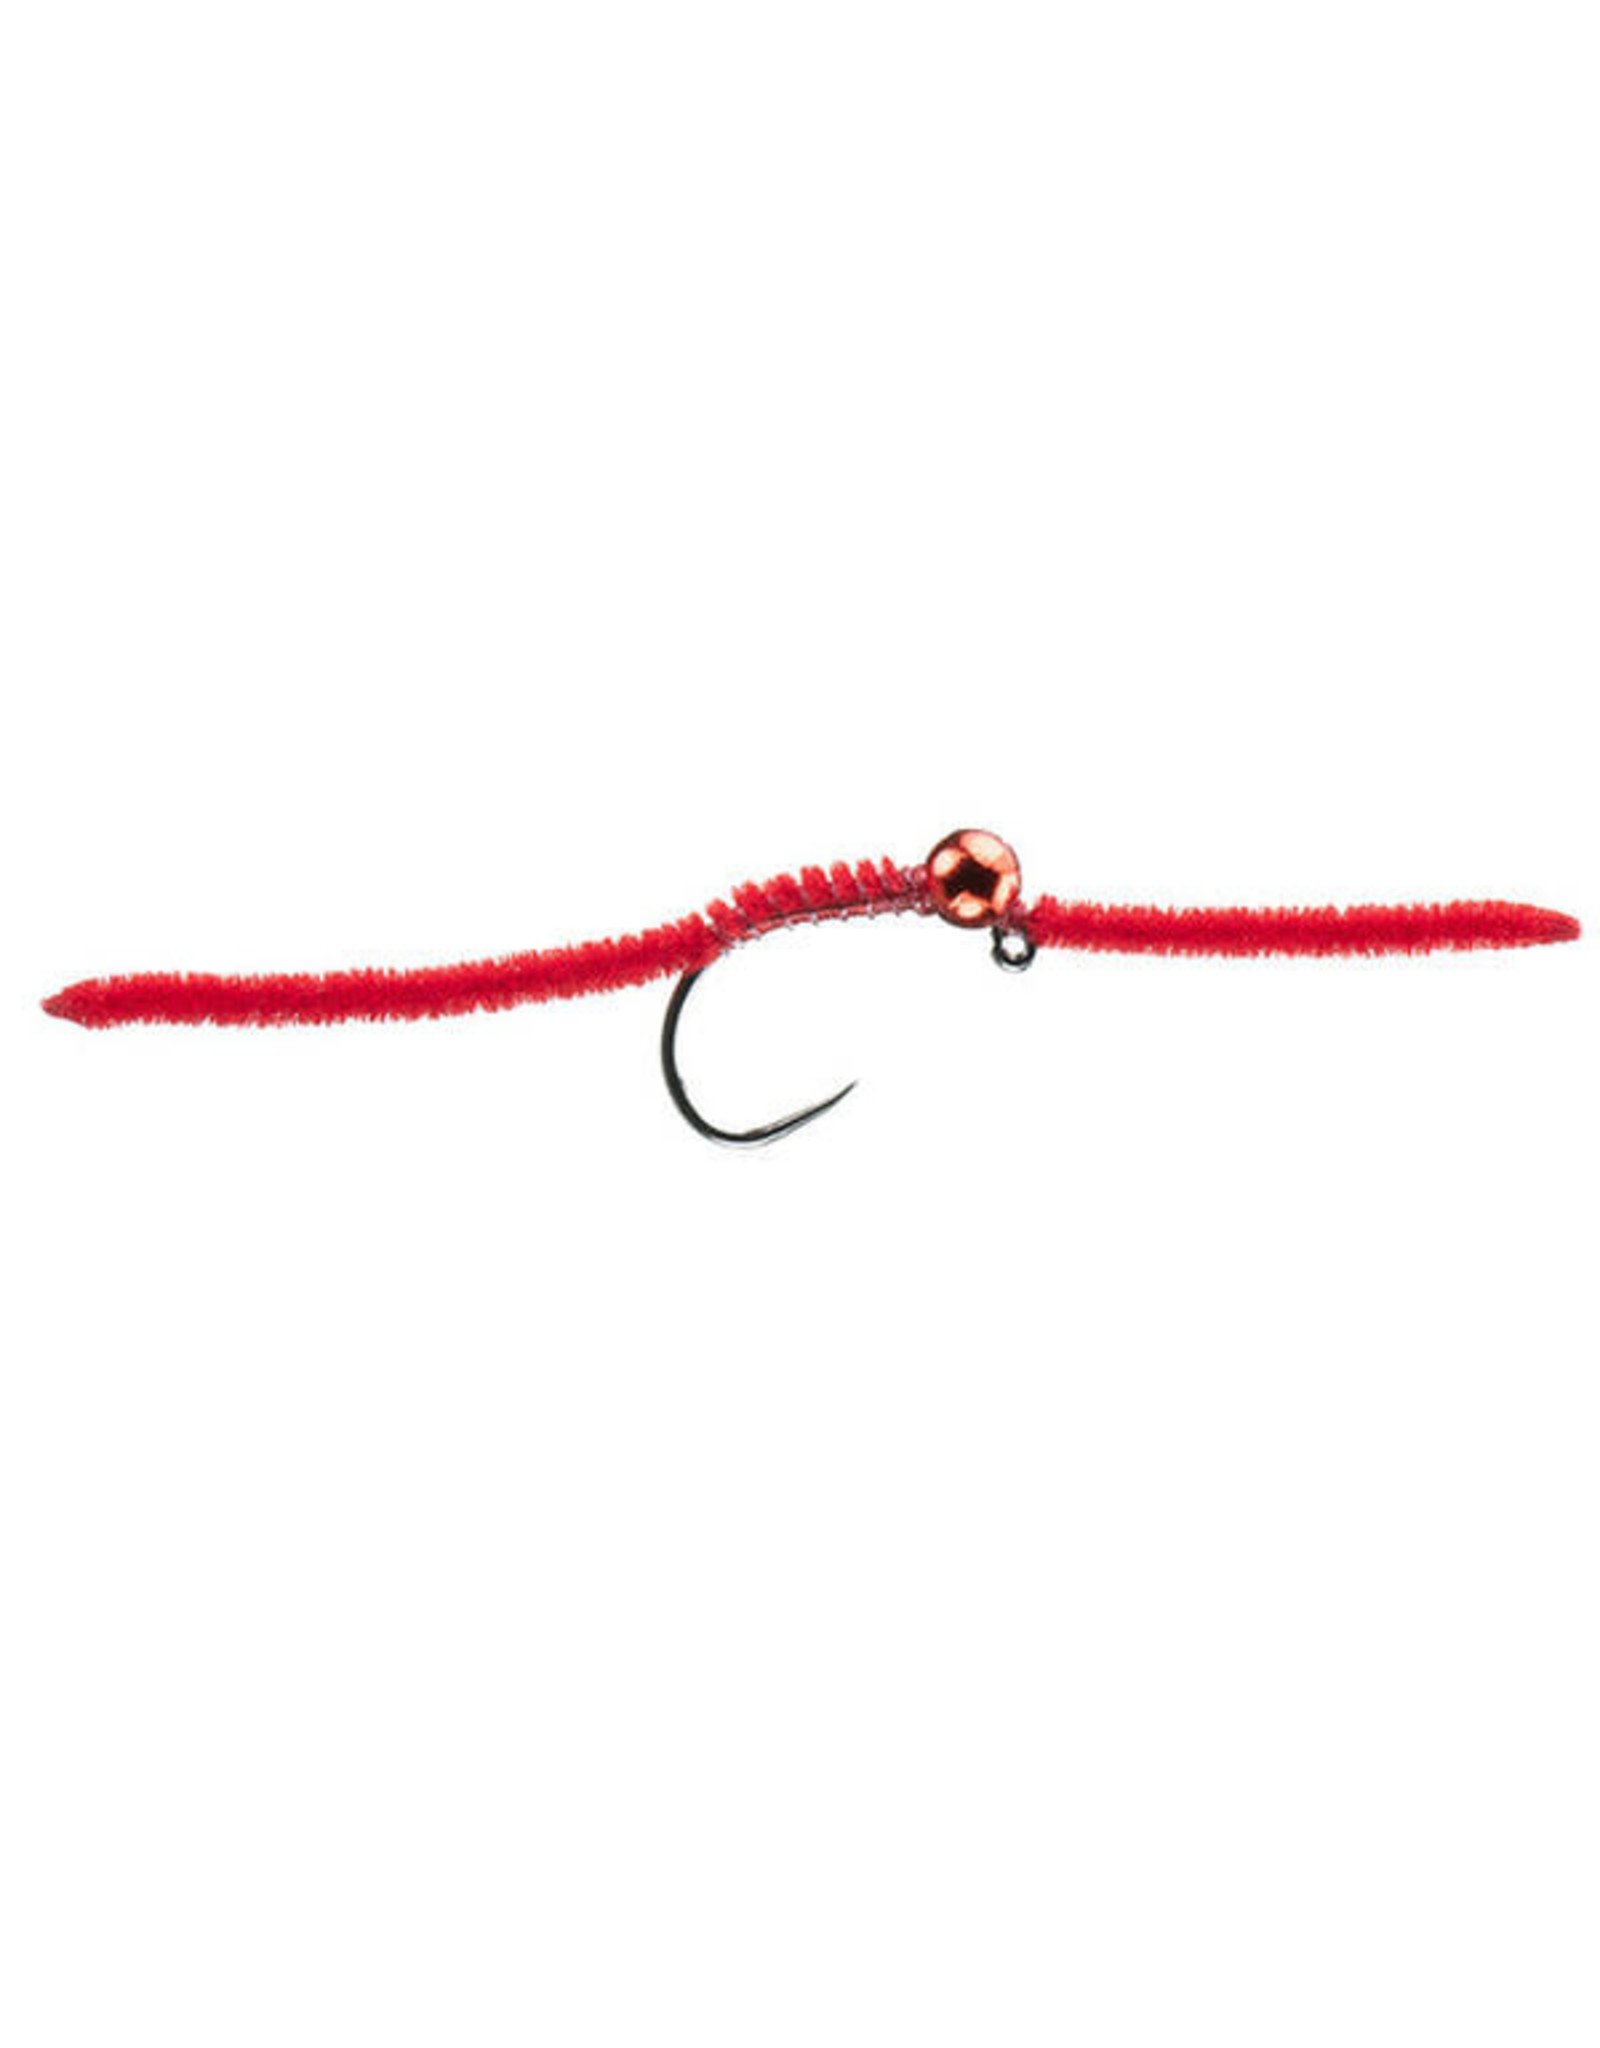 Jig San Juan Worm Red #14 (3-Pack) - Royal Gorge Anglers